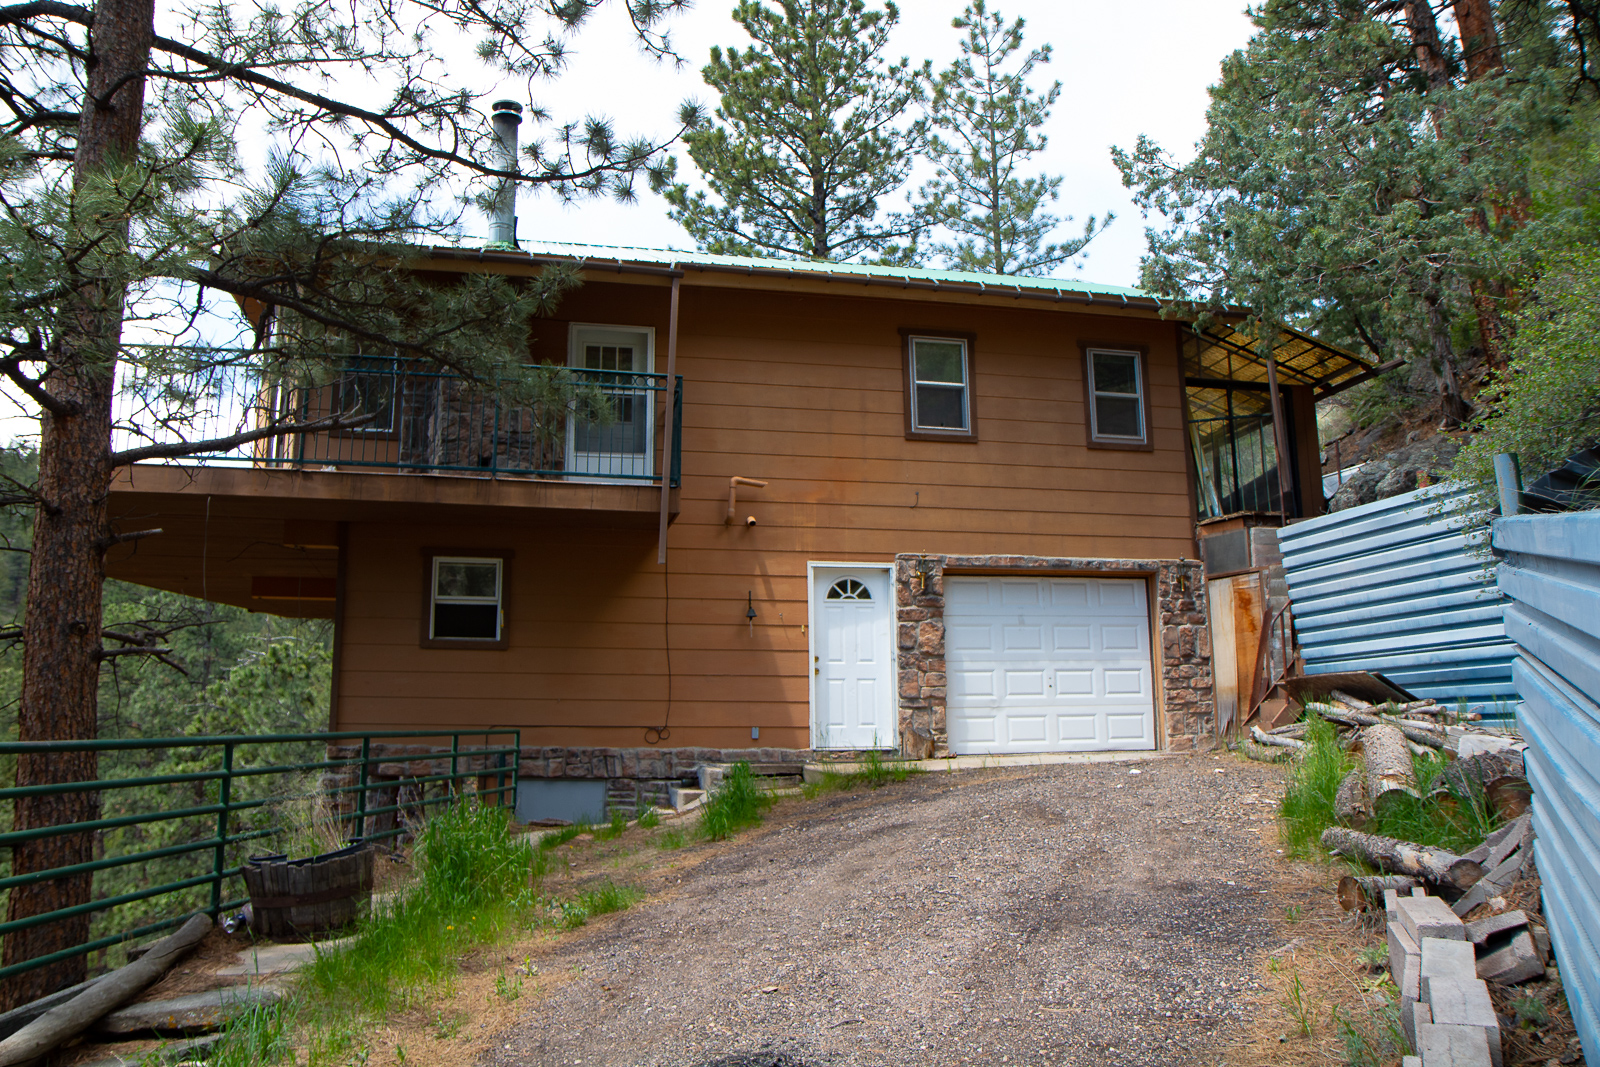 Our Colorado cabin before tour. 